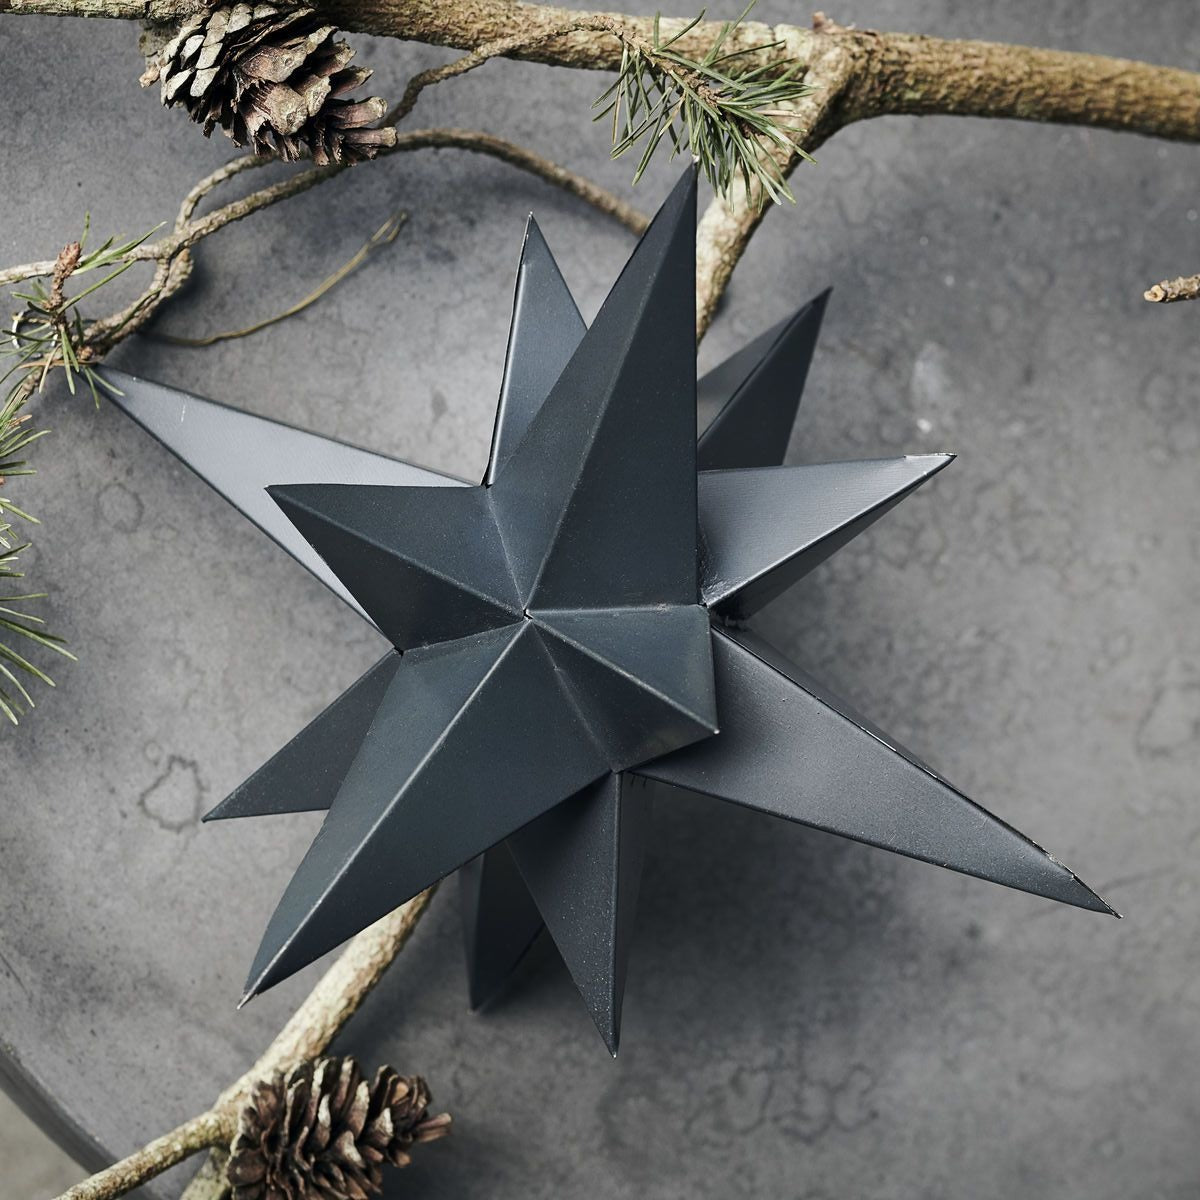 3 Dimensional Iron Christmas Star Ornament